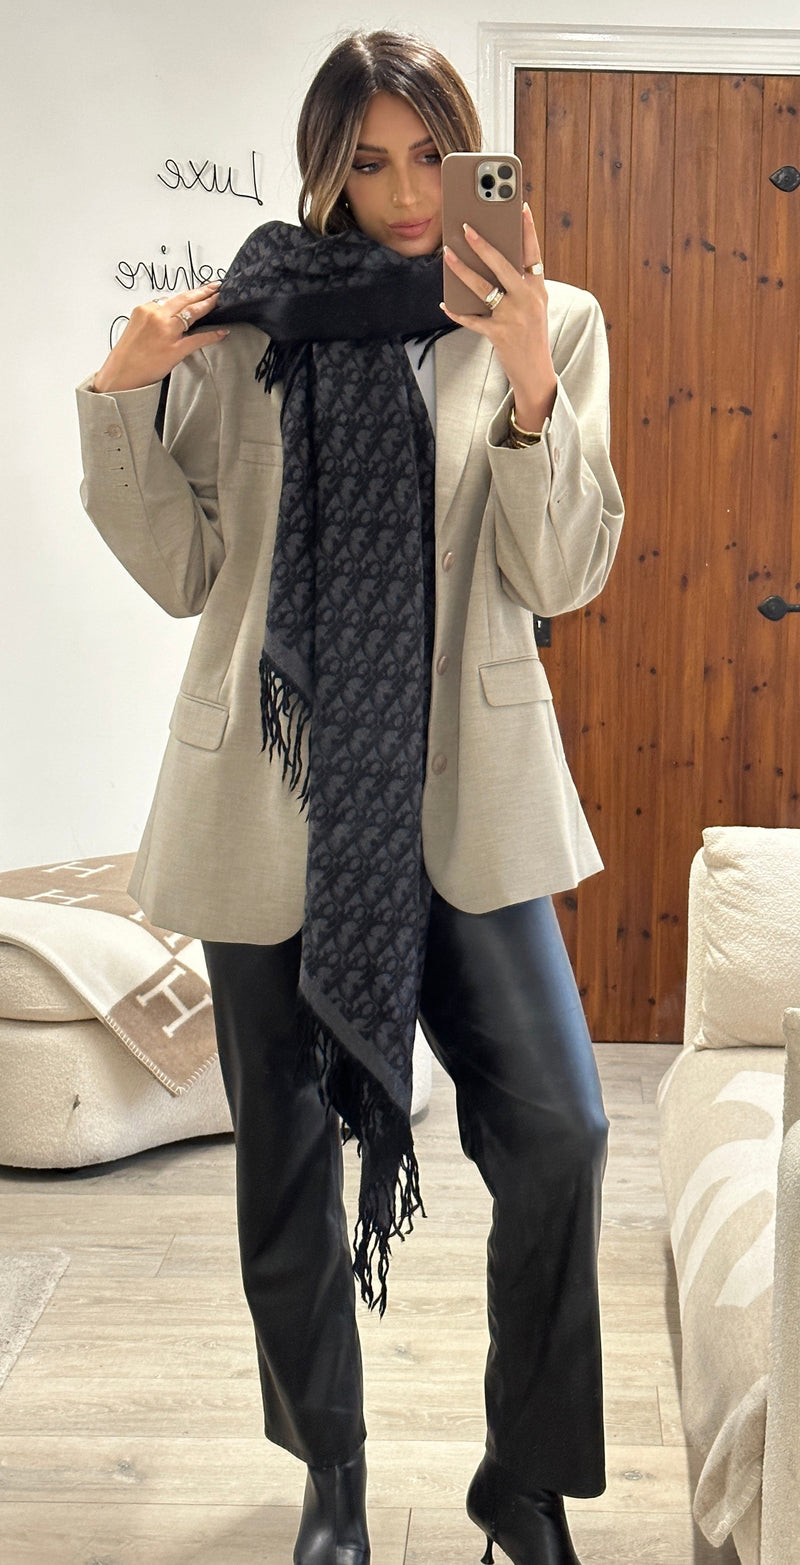 Christian Dior Oblique Wool Blanket Scarf